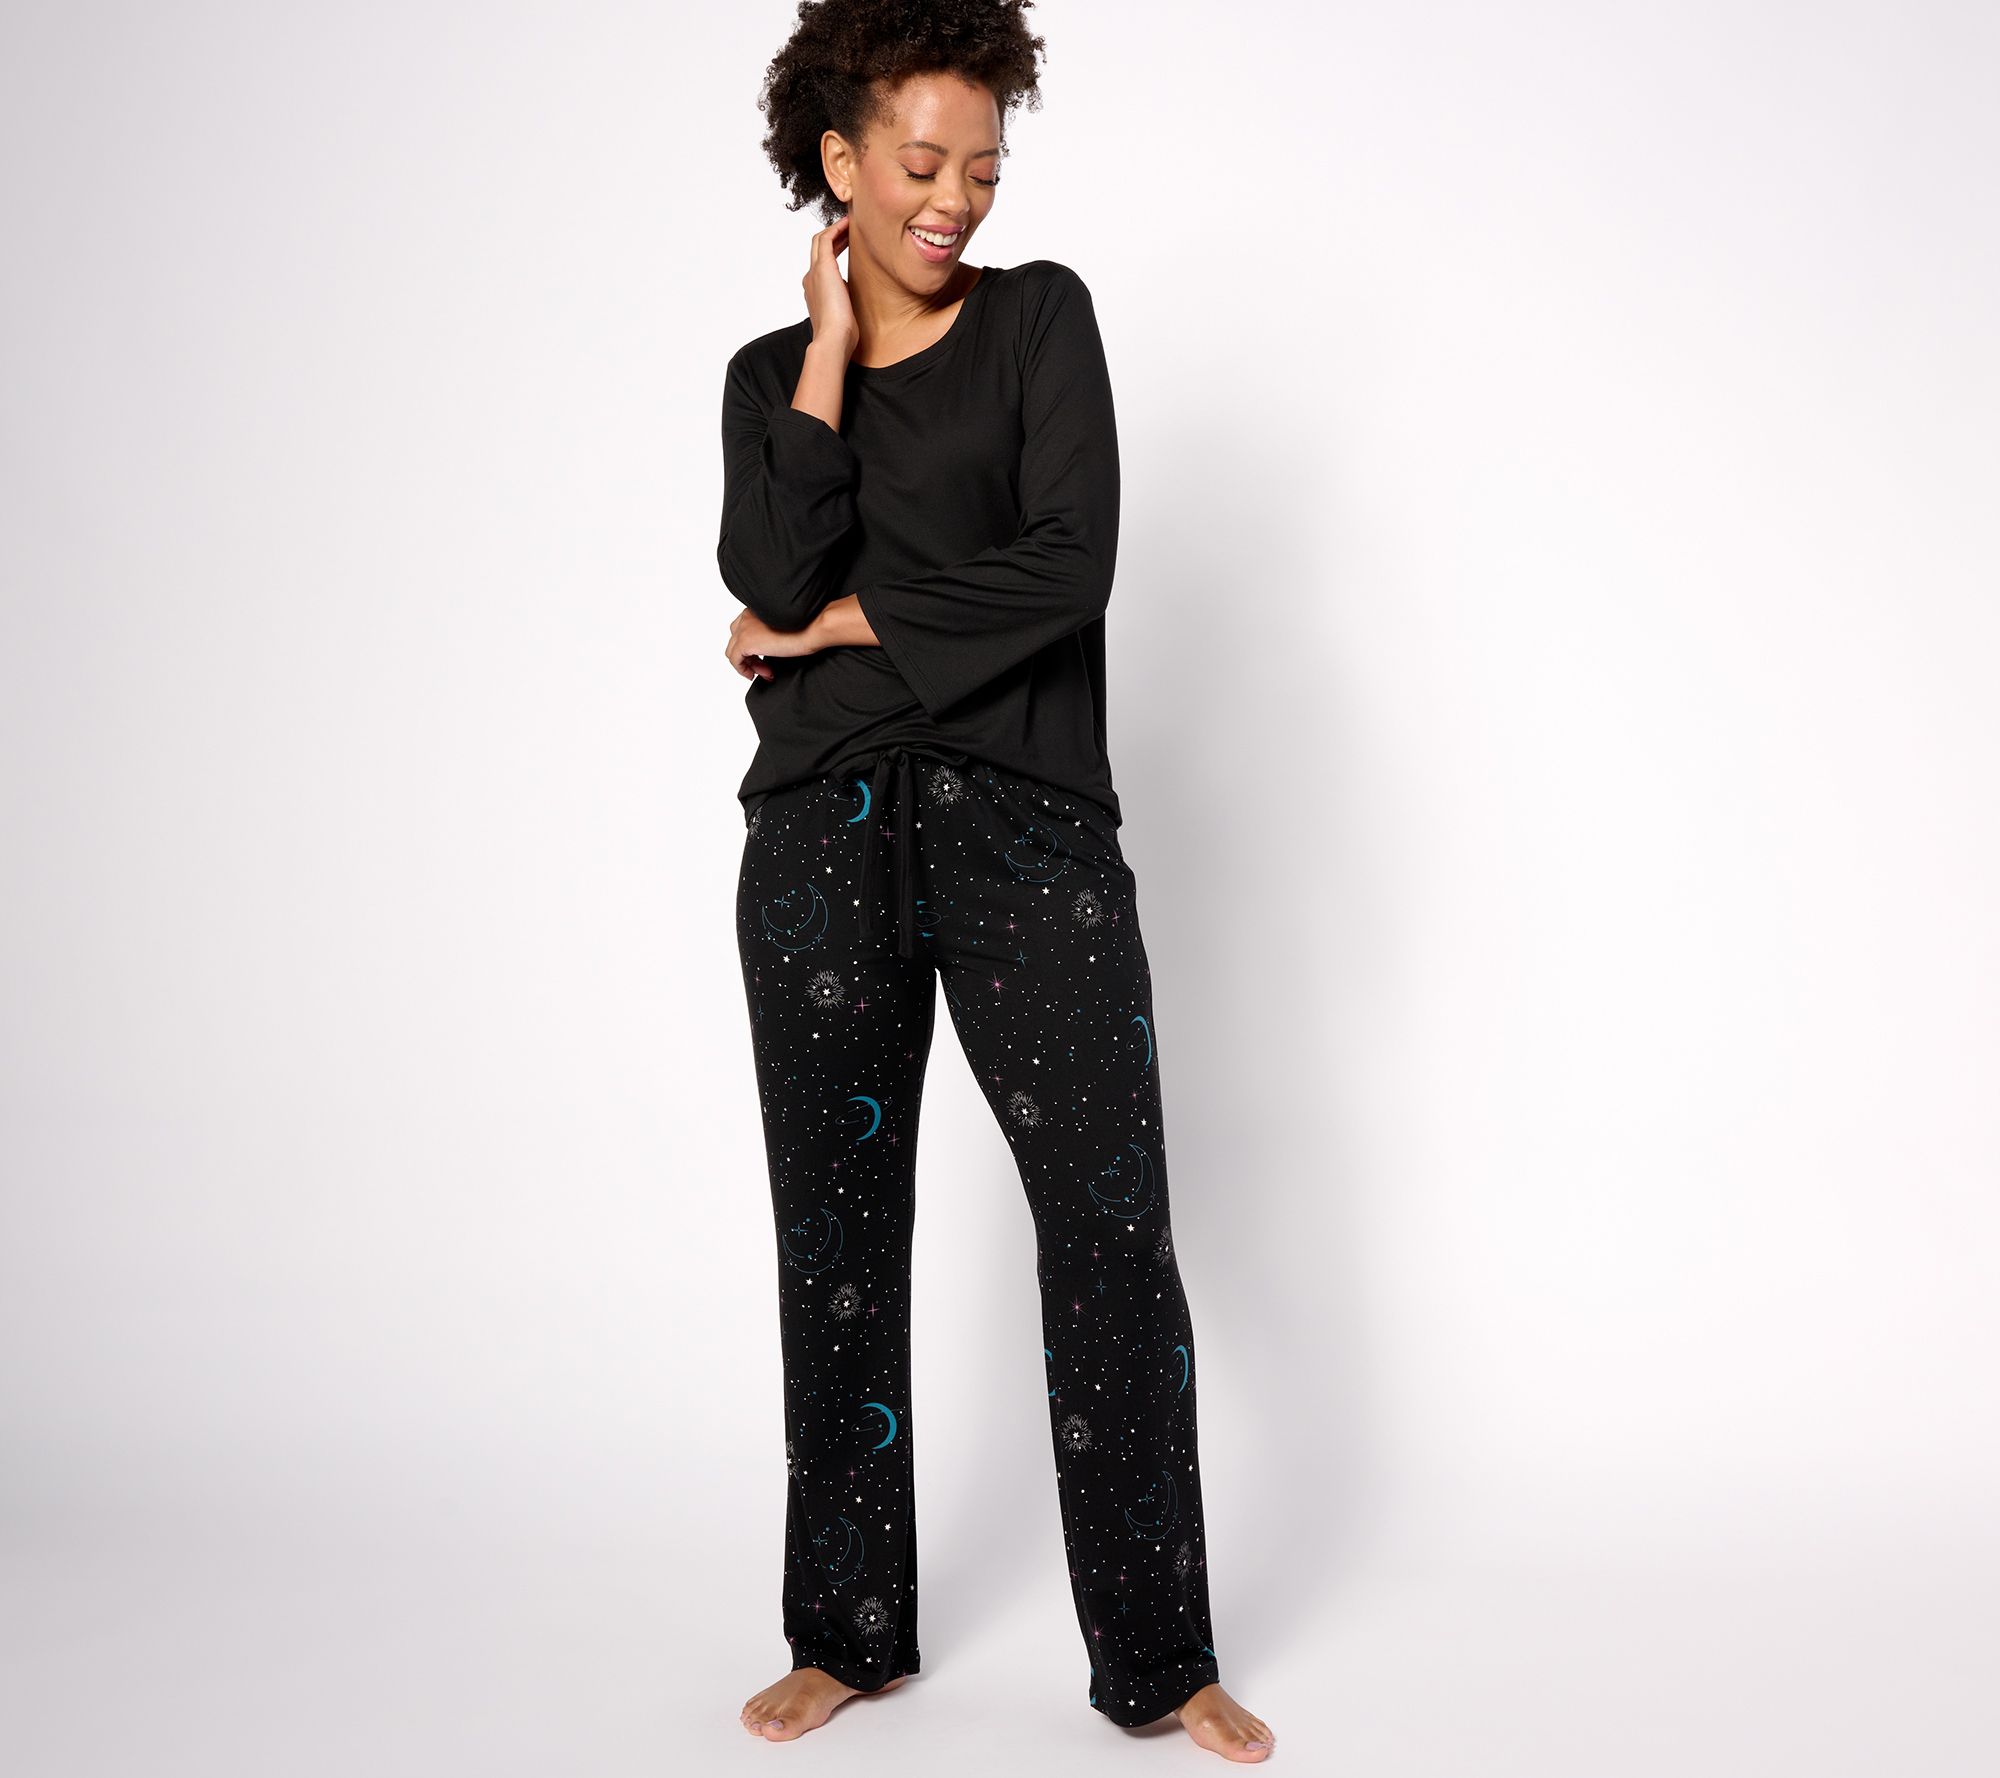 Women's Jersey Knit PJ Pants Adaptive Clothing for Seniors